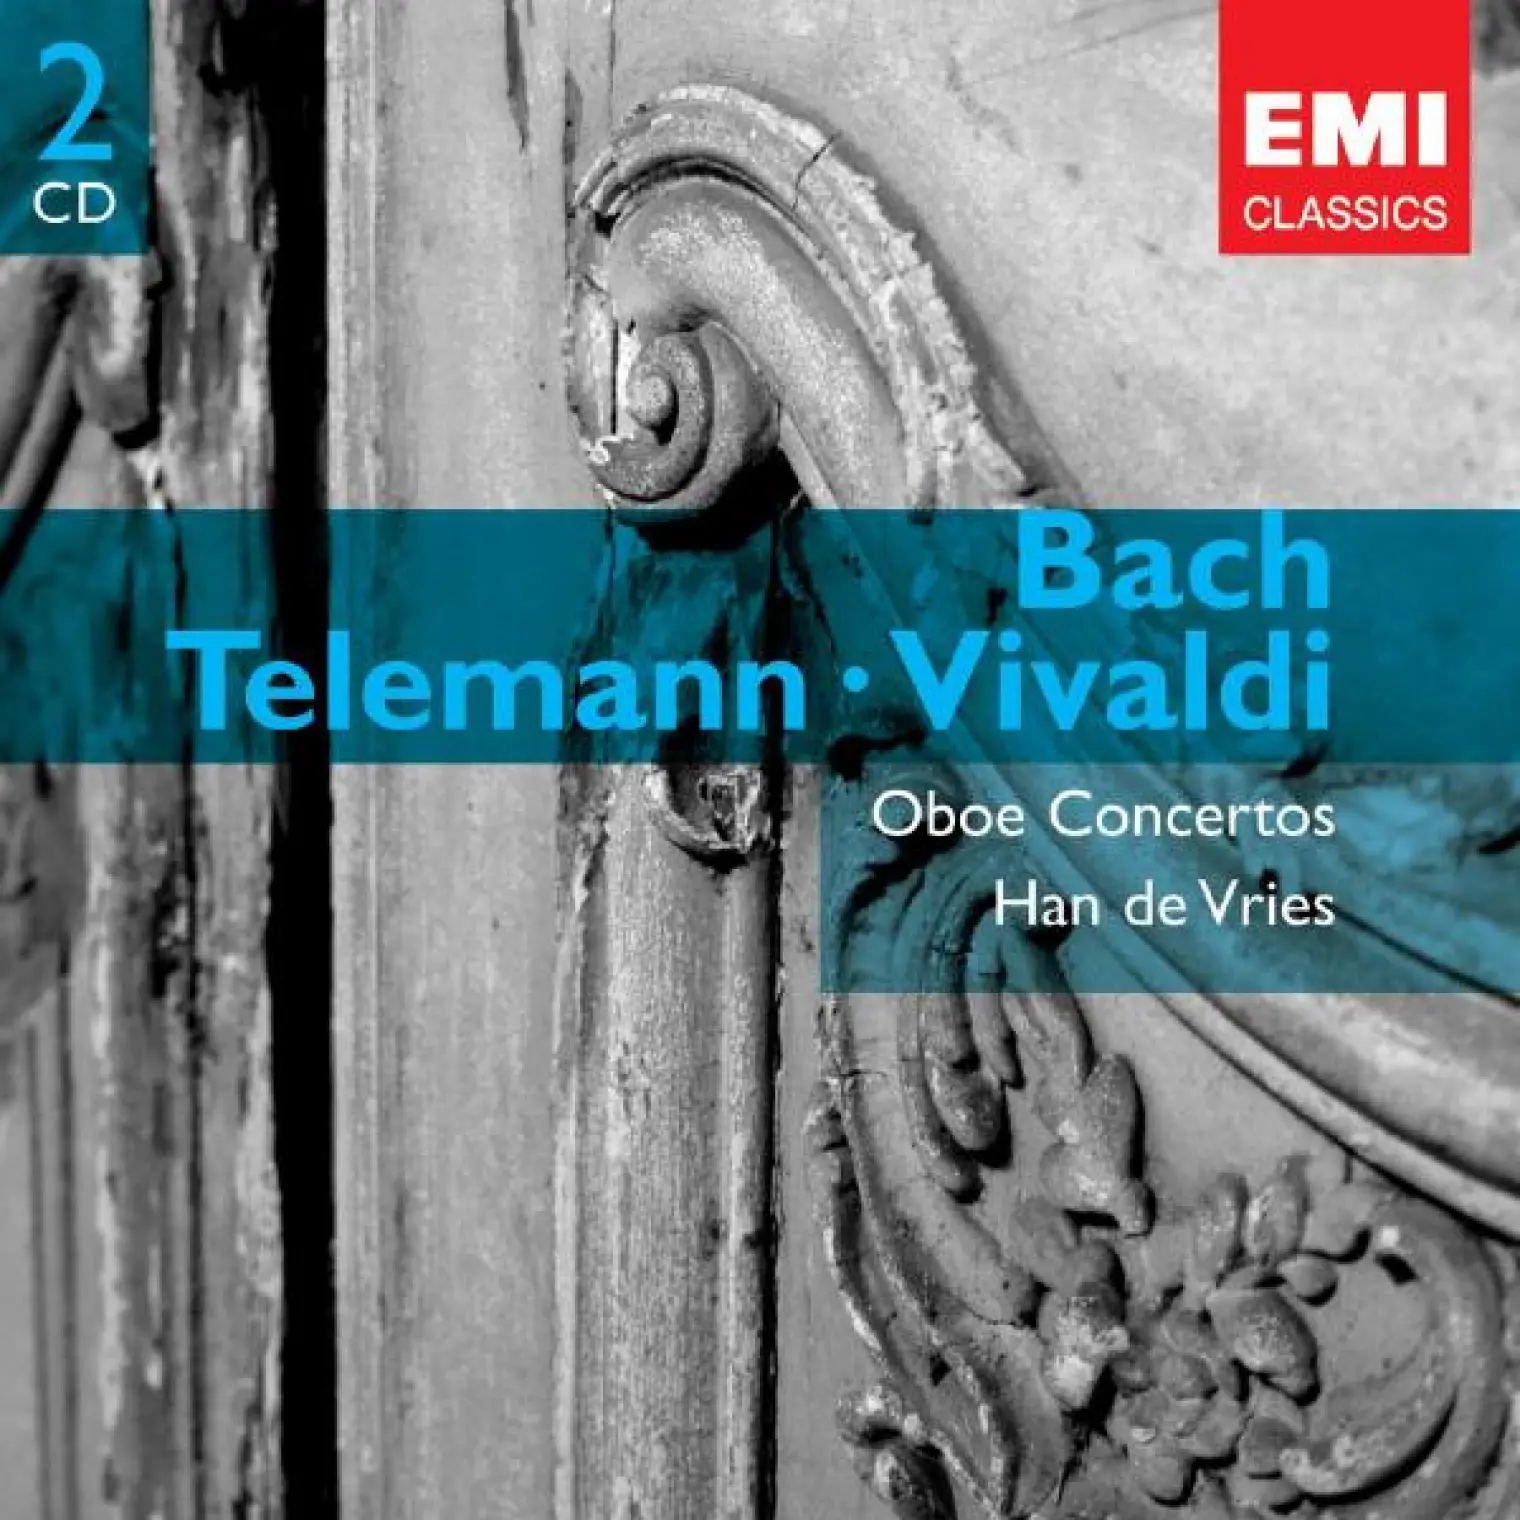 Telemann, Bach & Vivaldi: Oboe Concertos -  Han De Vries 